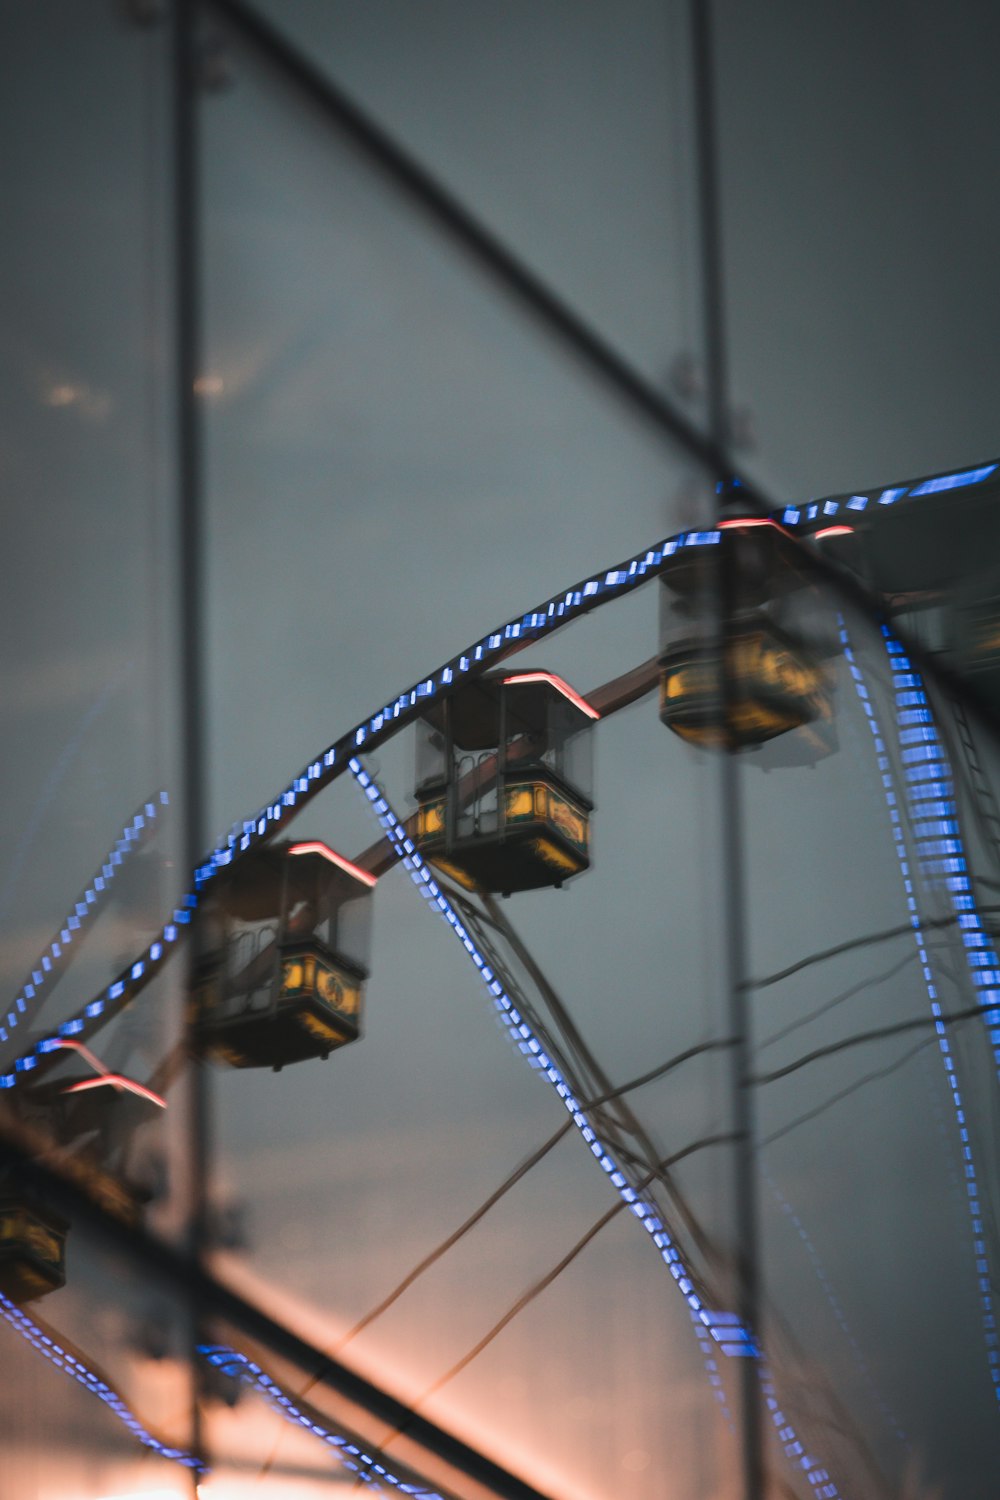 a ferris wheel at a carnival at night